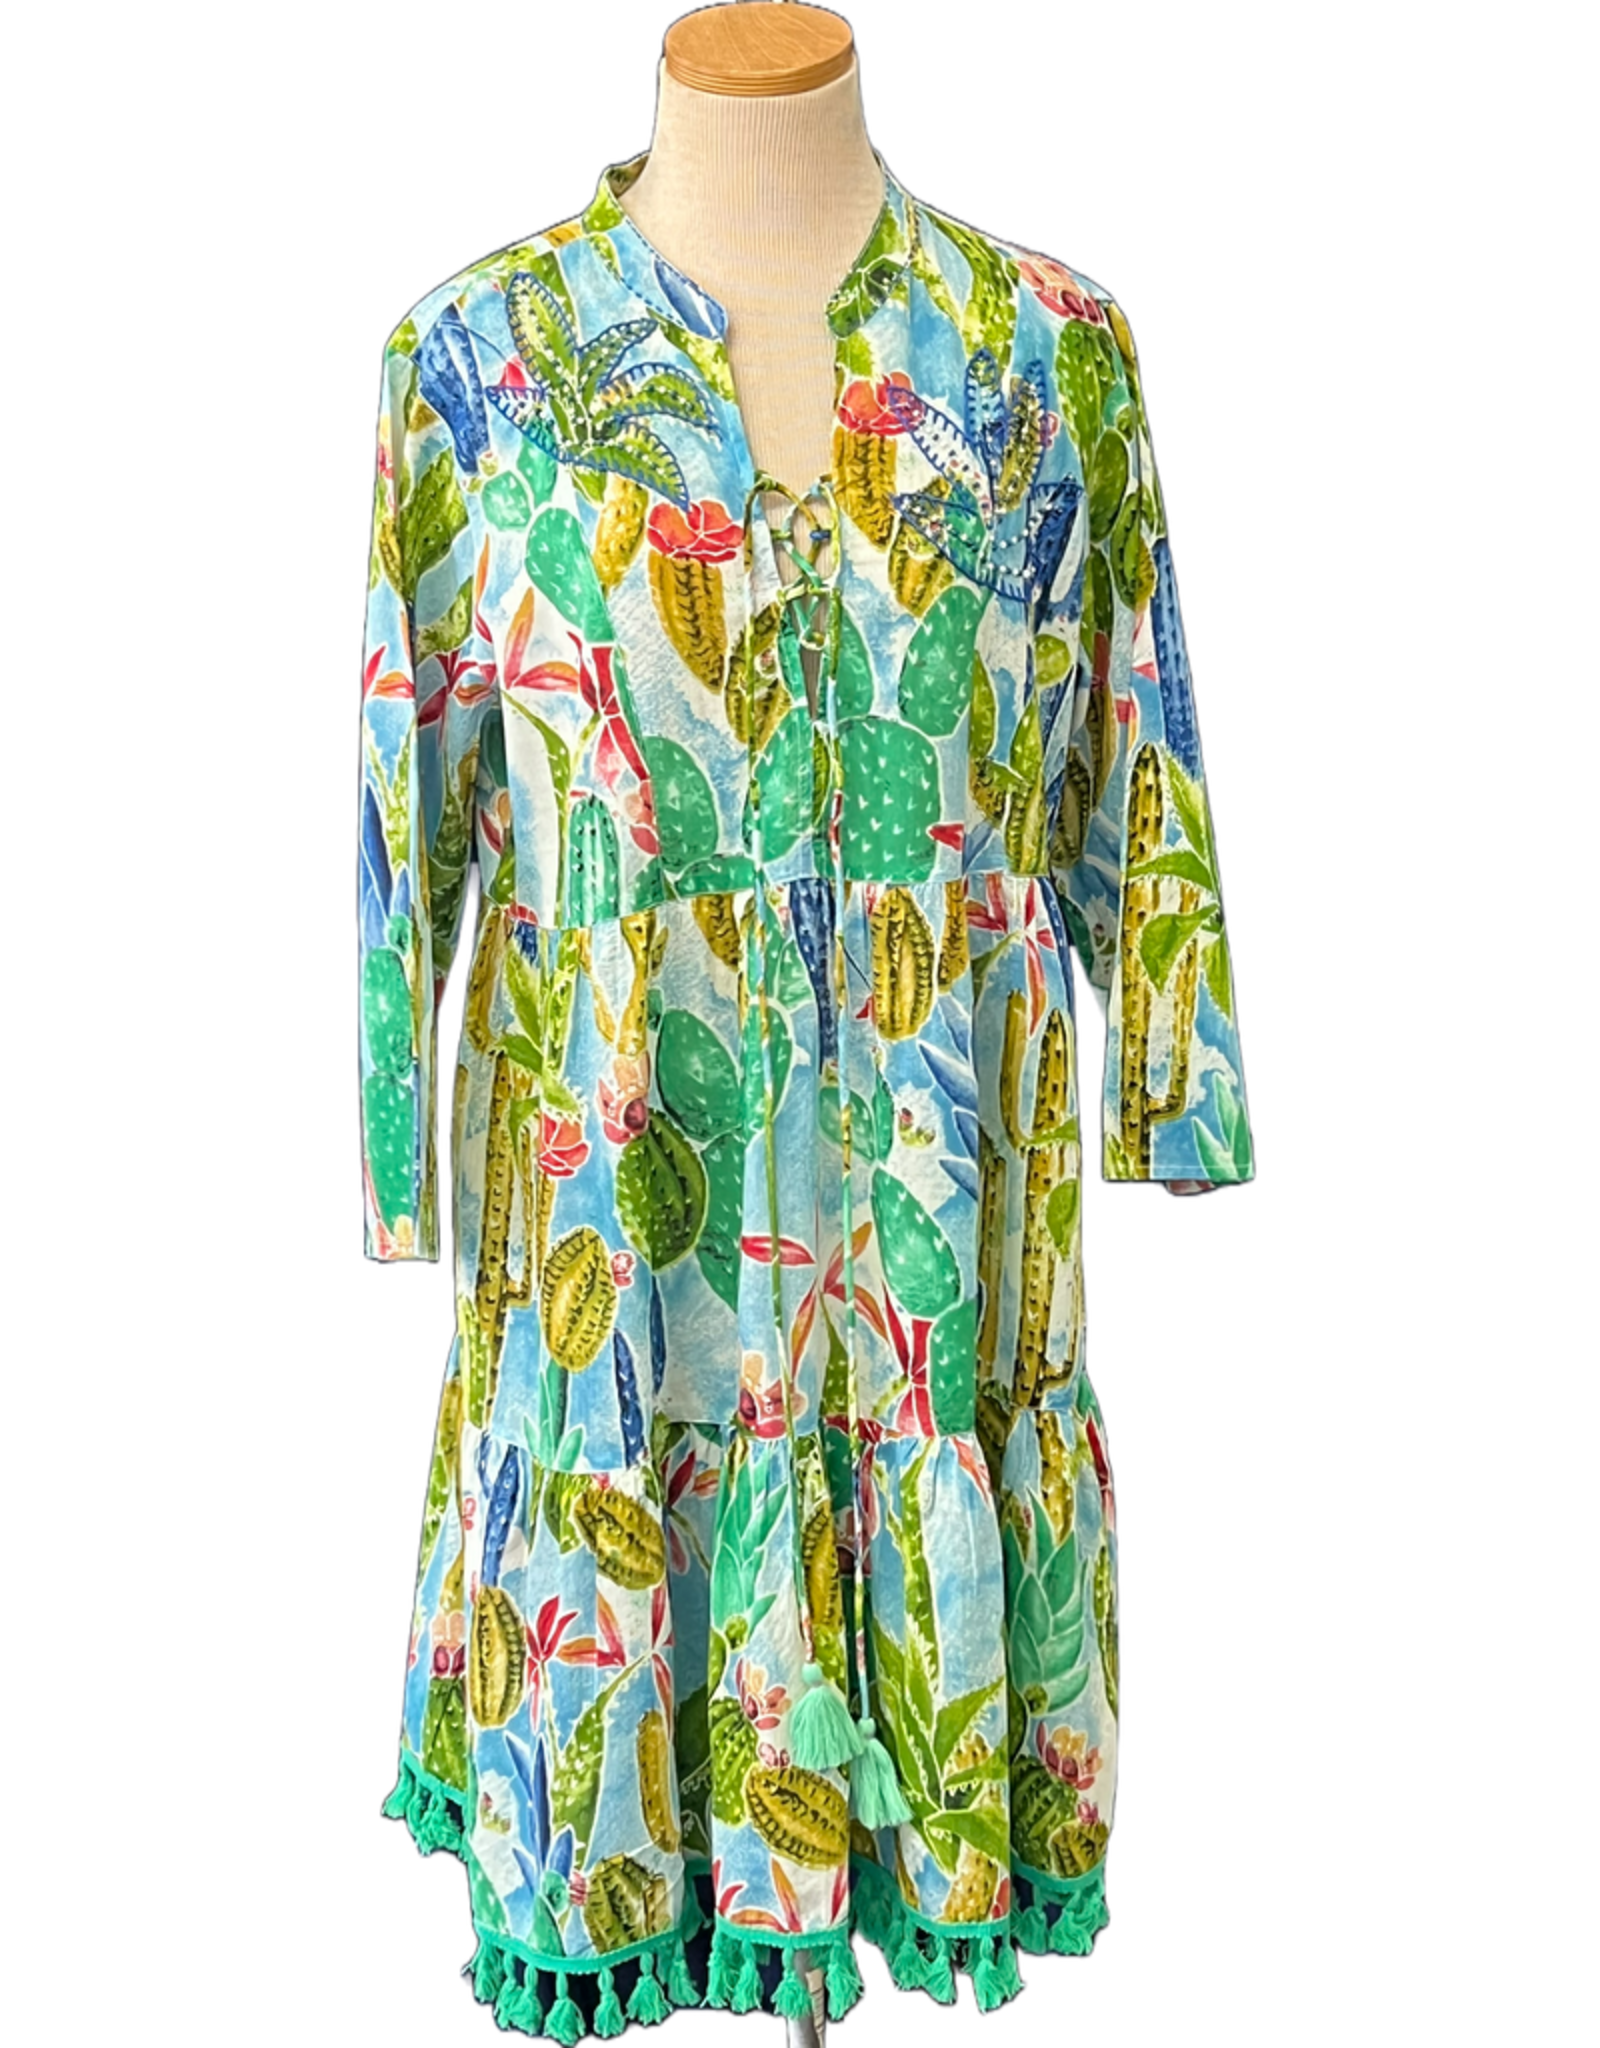 Succulent Beaded & Embroidered Tassel Dress